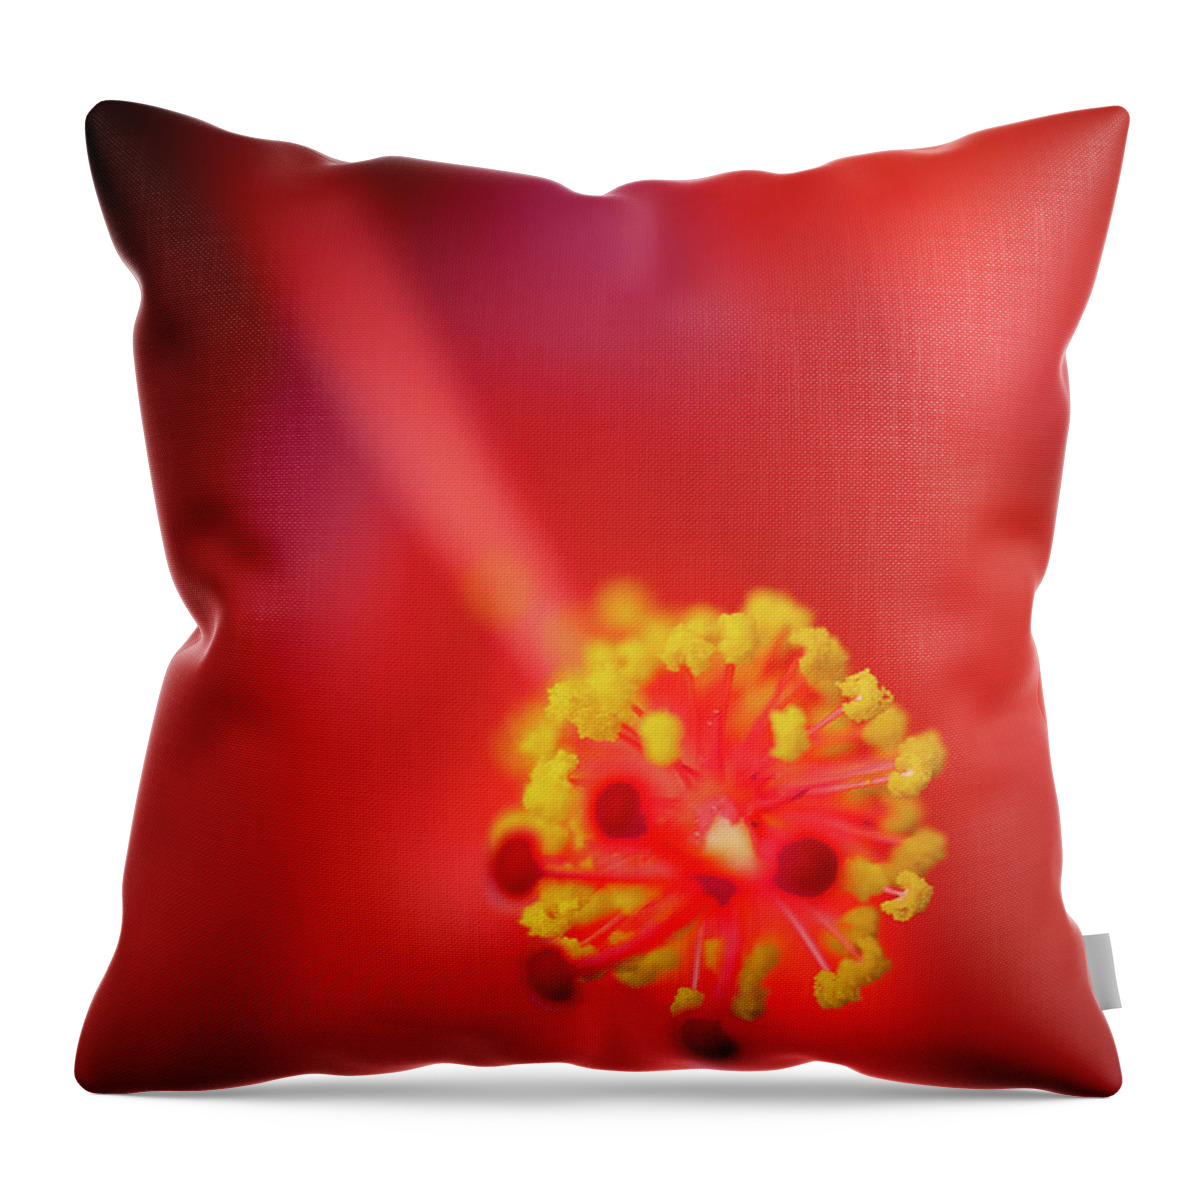 Red Throw Pillow featuring the photograph Stamen by M Kathleen Warren